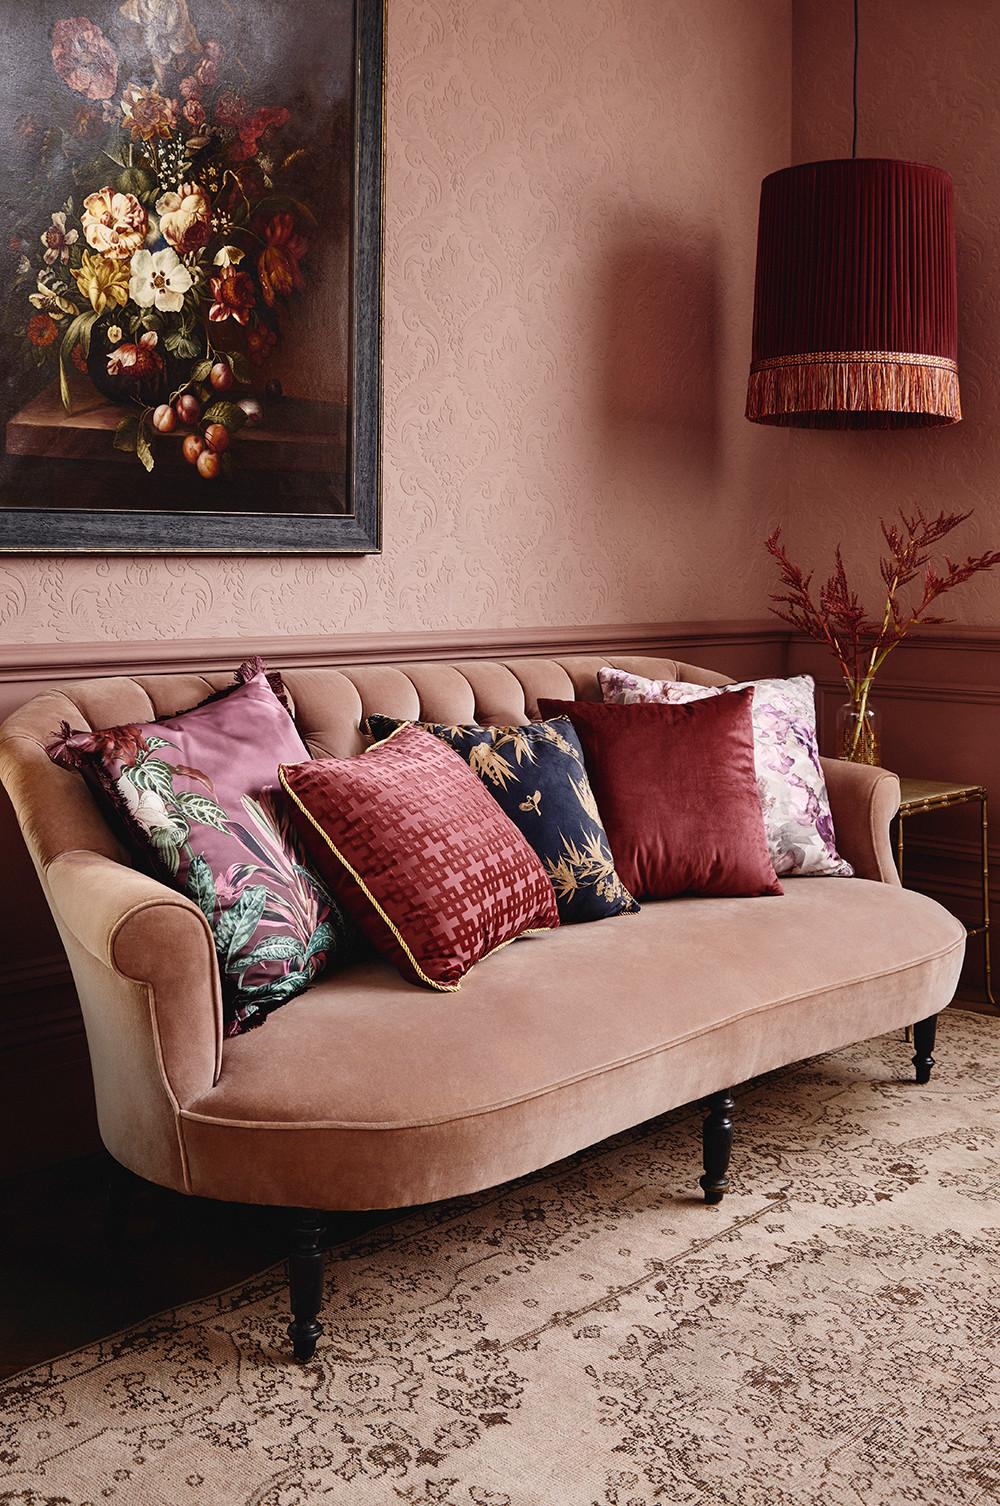 sofá rosa